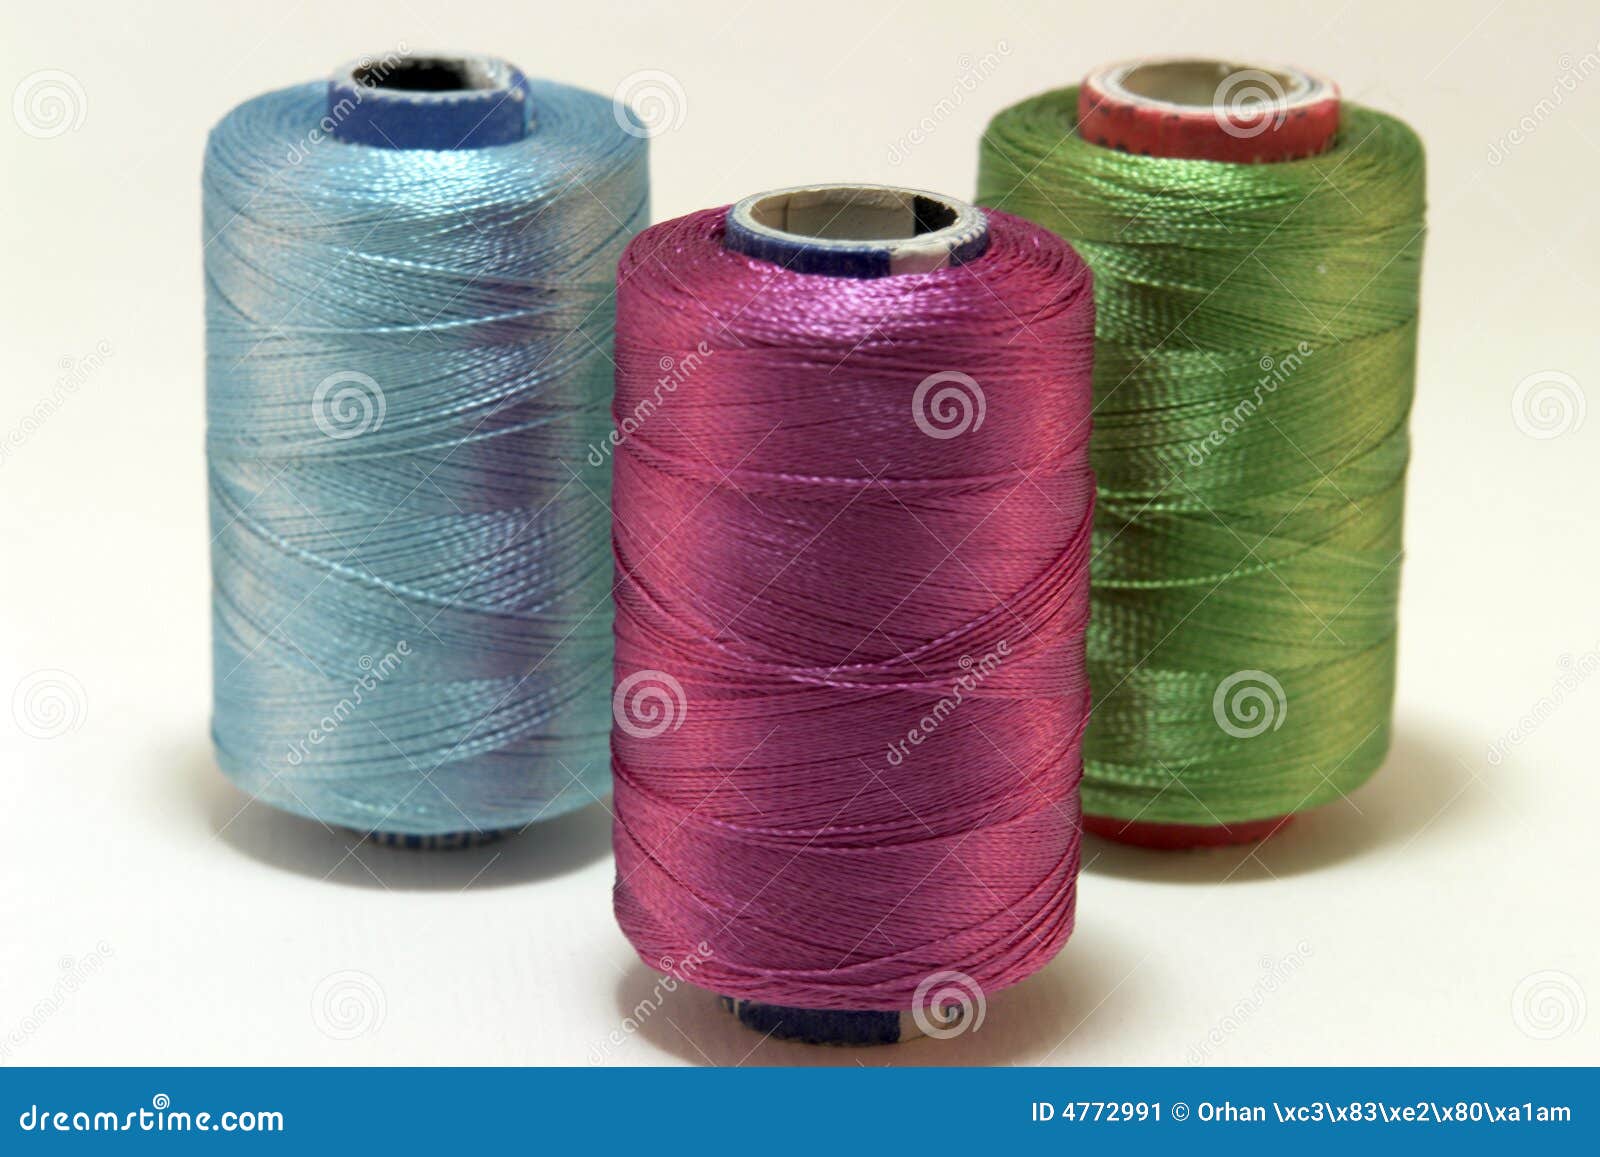 Embroidery yarn bobbins stock image. Image of textile - 4772991